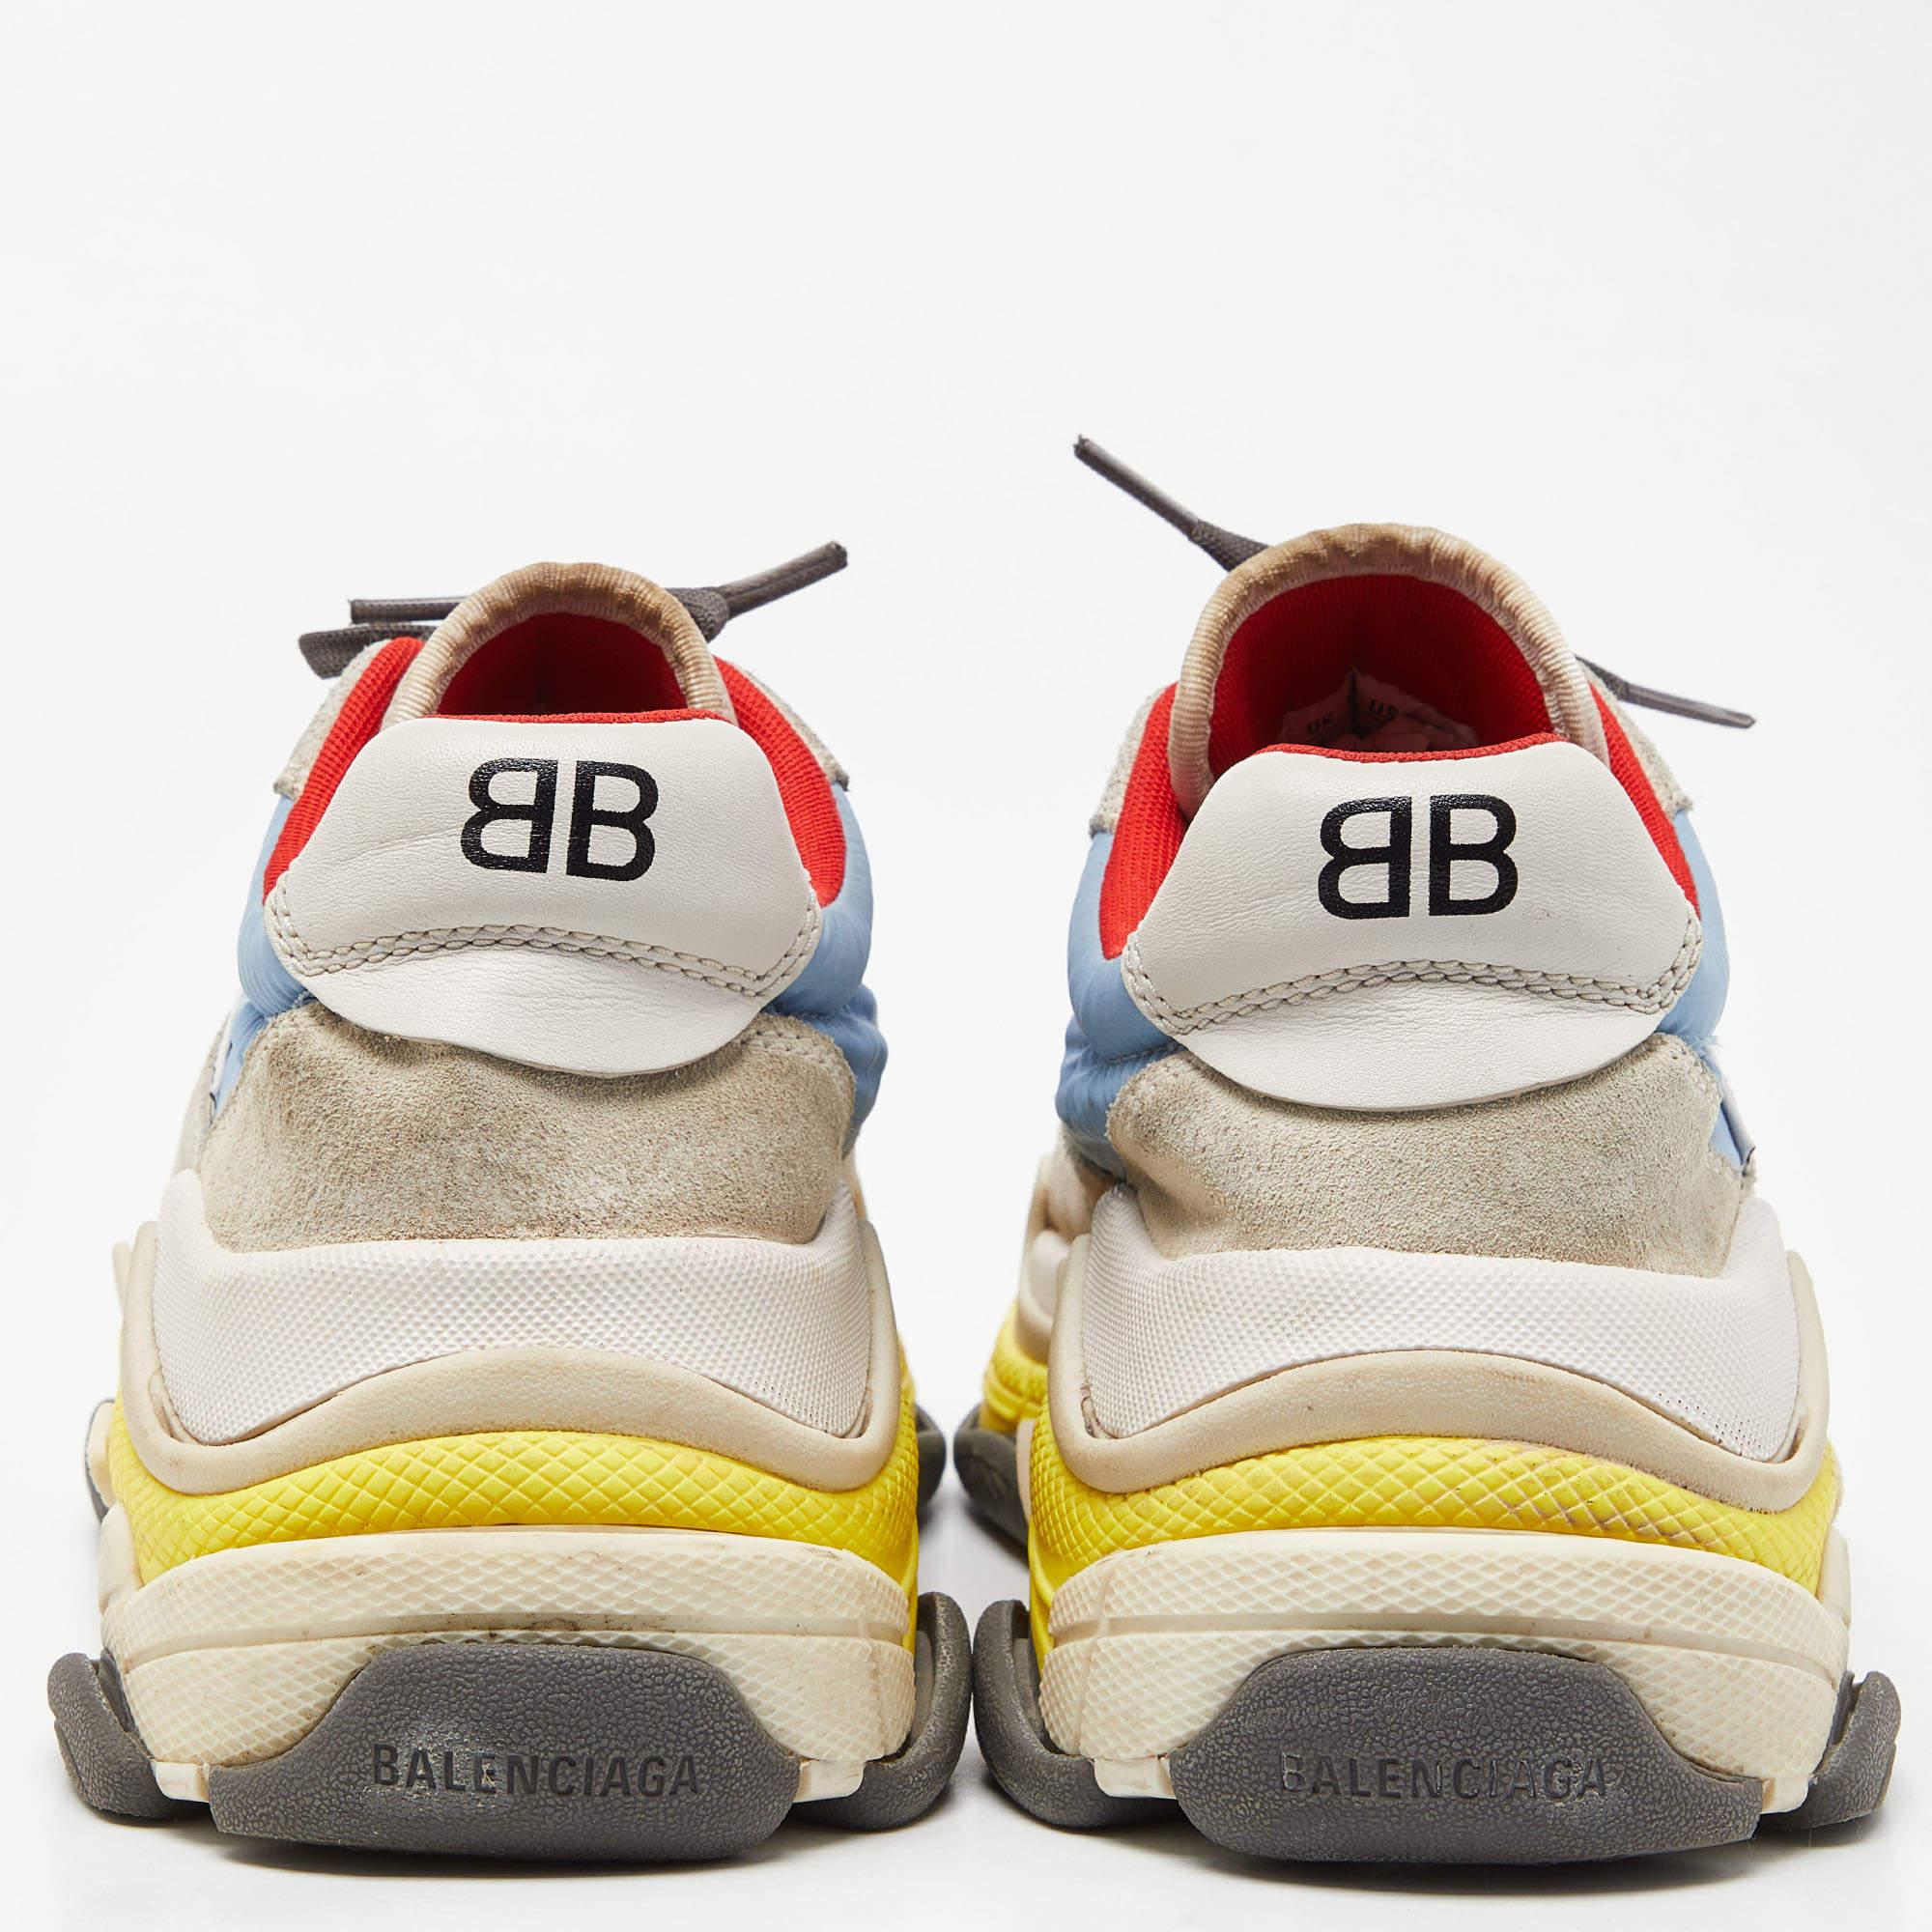 Balenciaga Multicolor Nylon and Suede Triple S Sneakers Size 40 For Sale 4